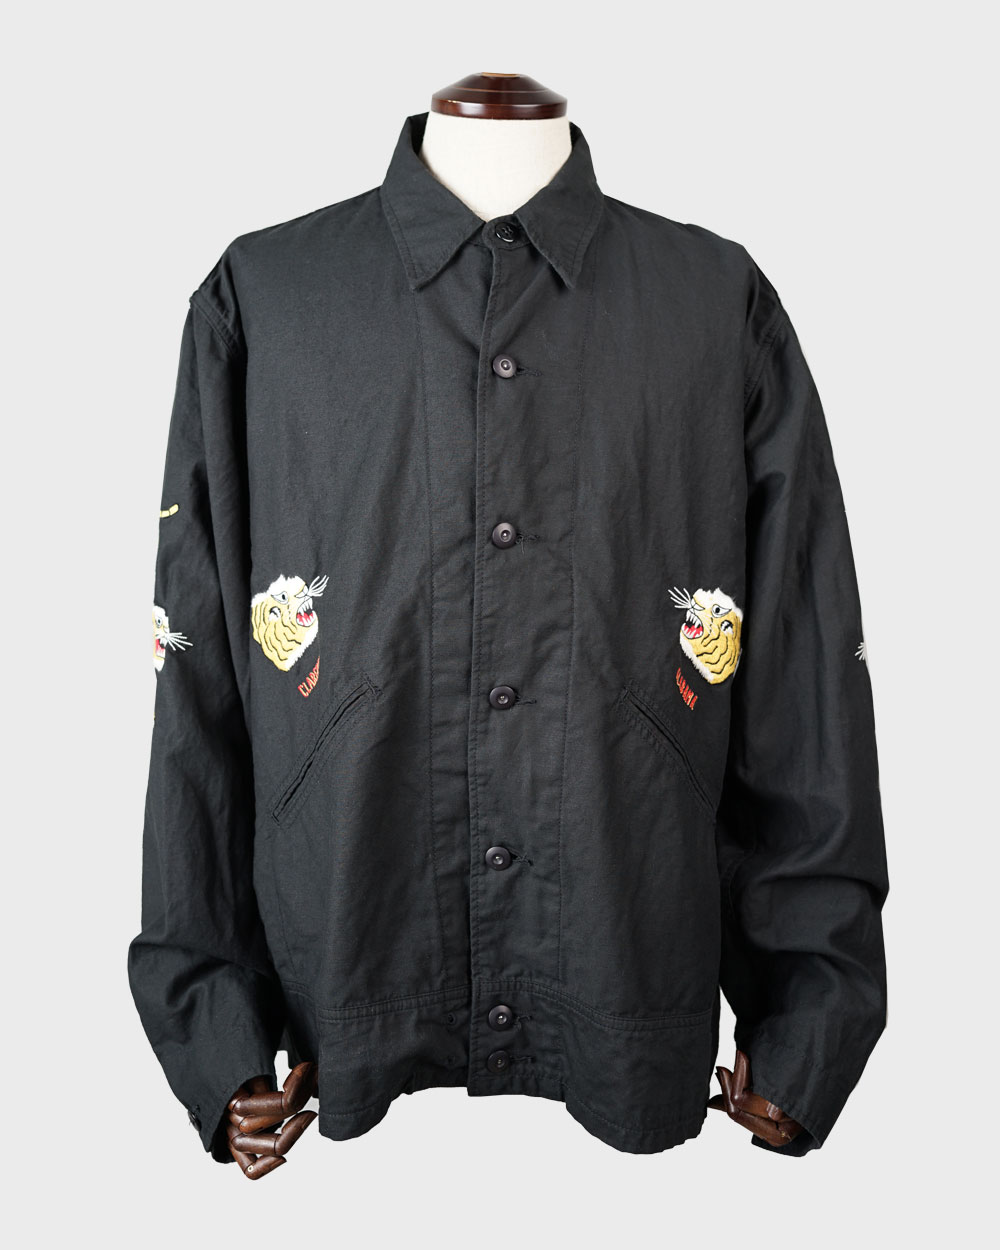 CAL O LINE Tiger souvenir jacket (Black)